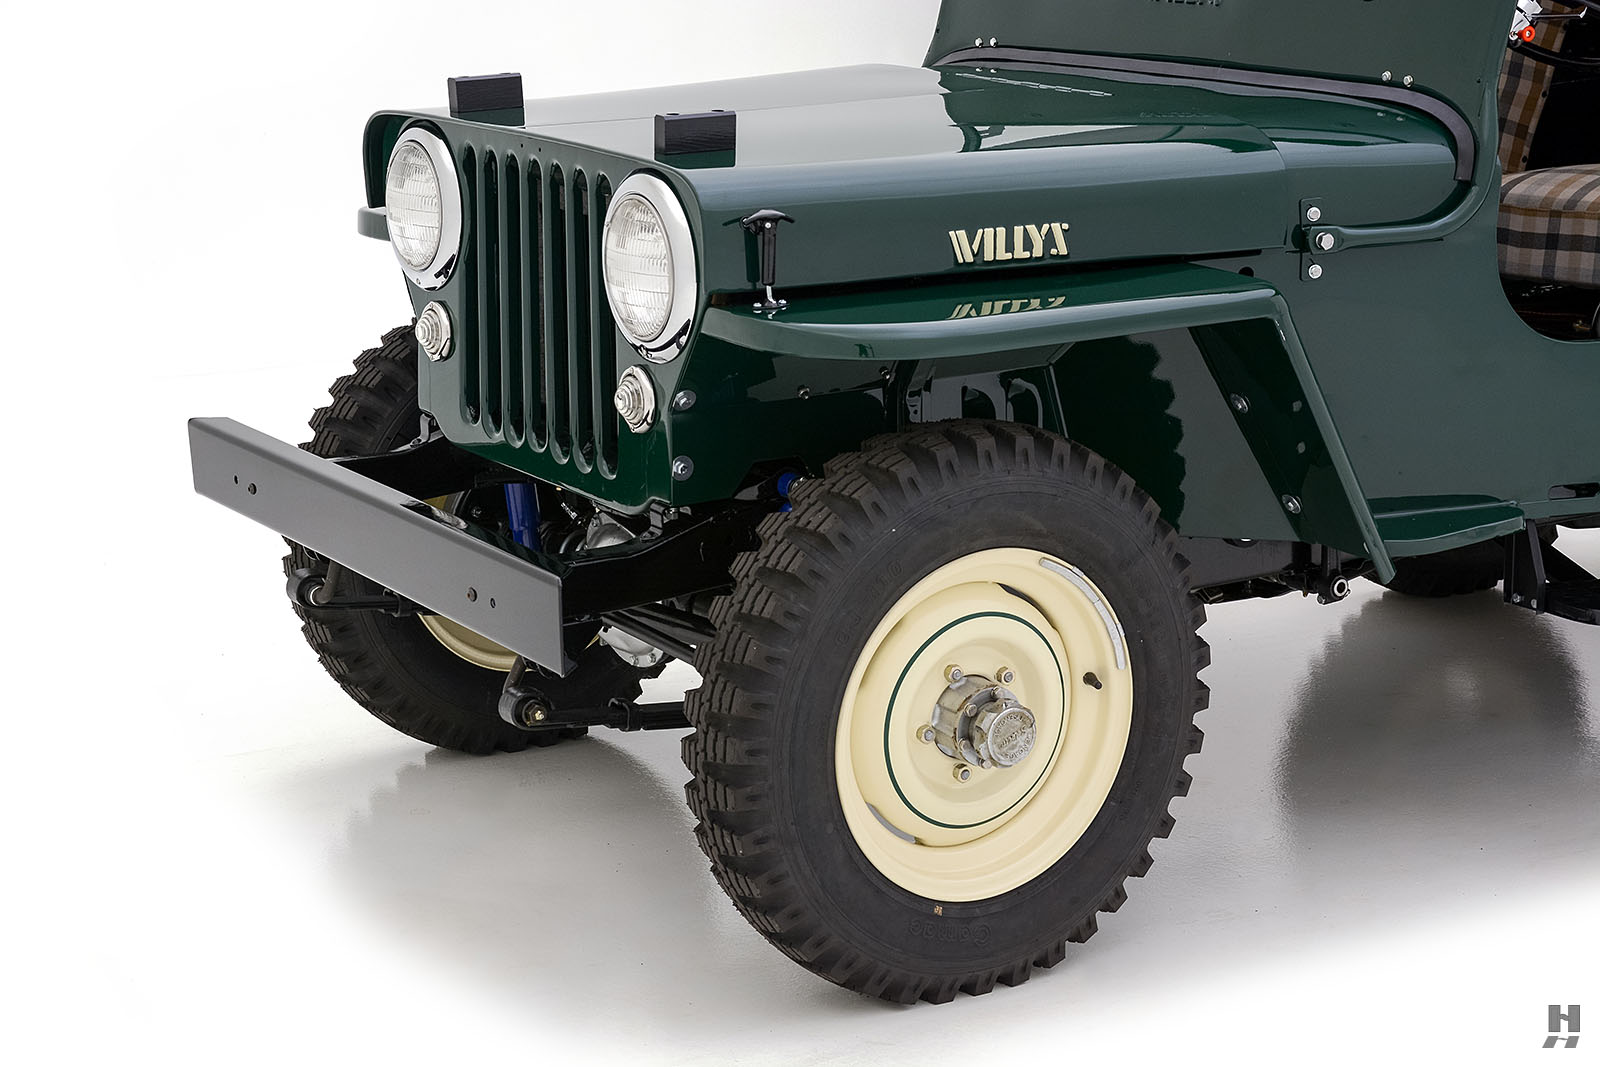 1956 willys-jeep cj-3b 1/4 ton